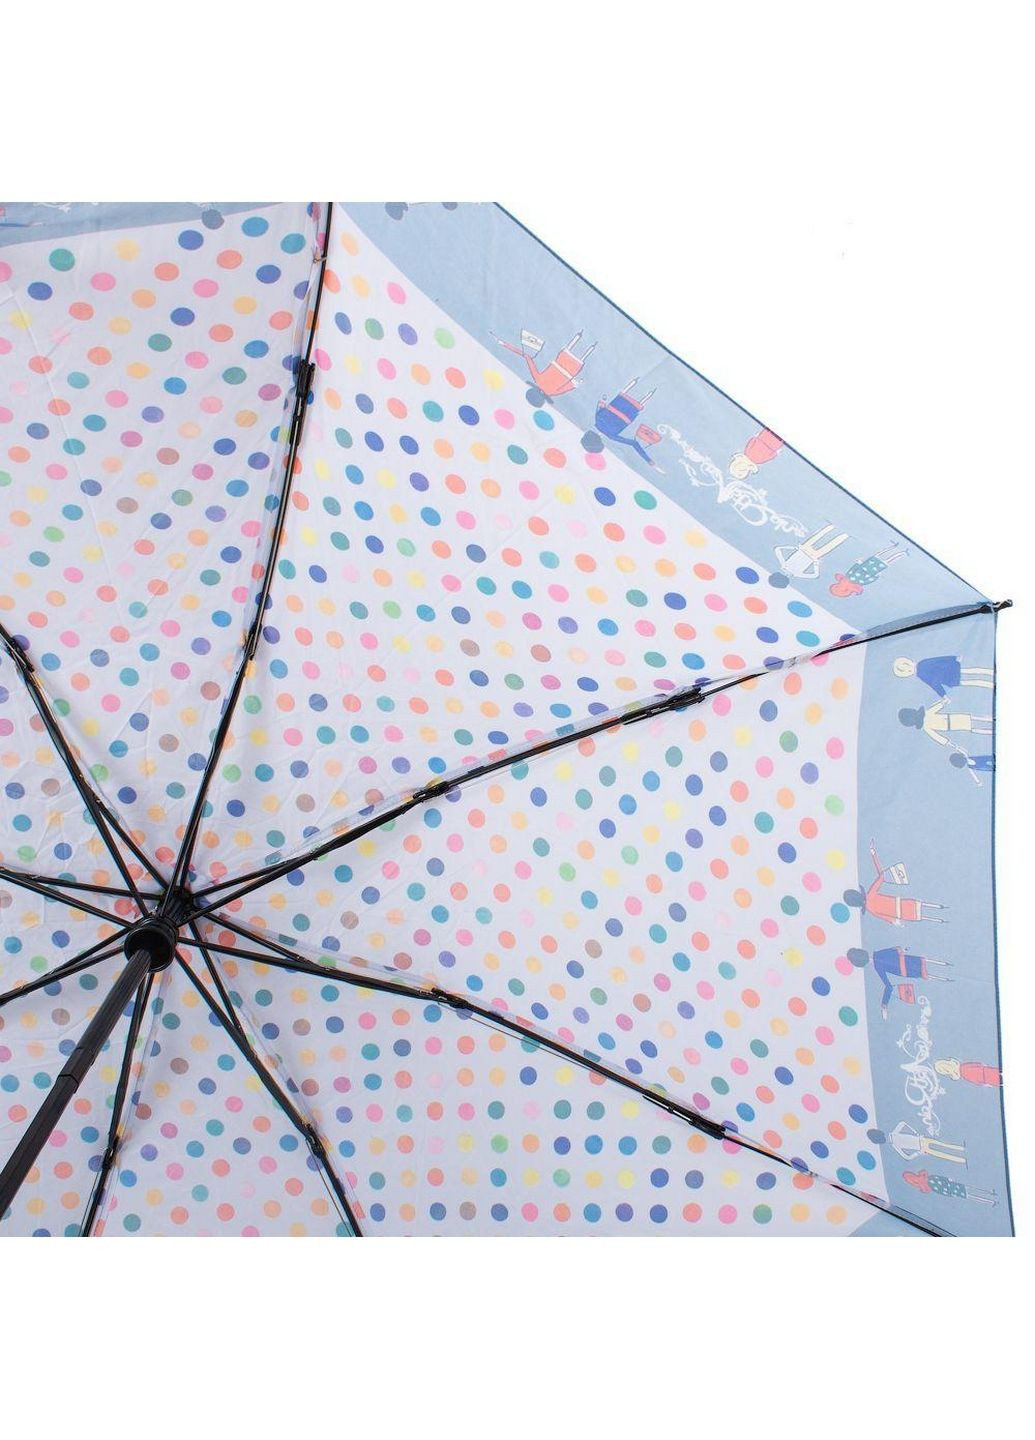 Жіночий складний зонт повний автомат Art rain (282590326)